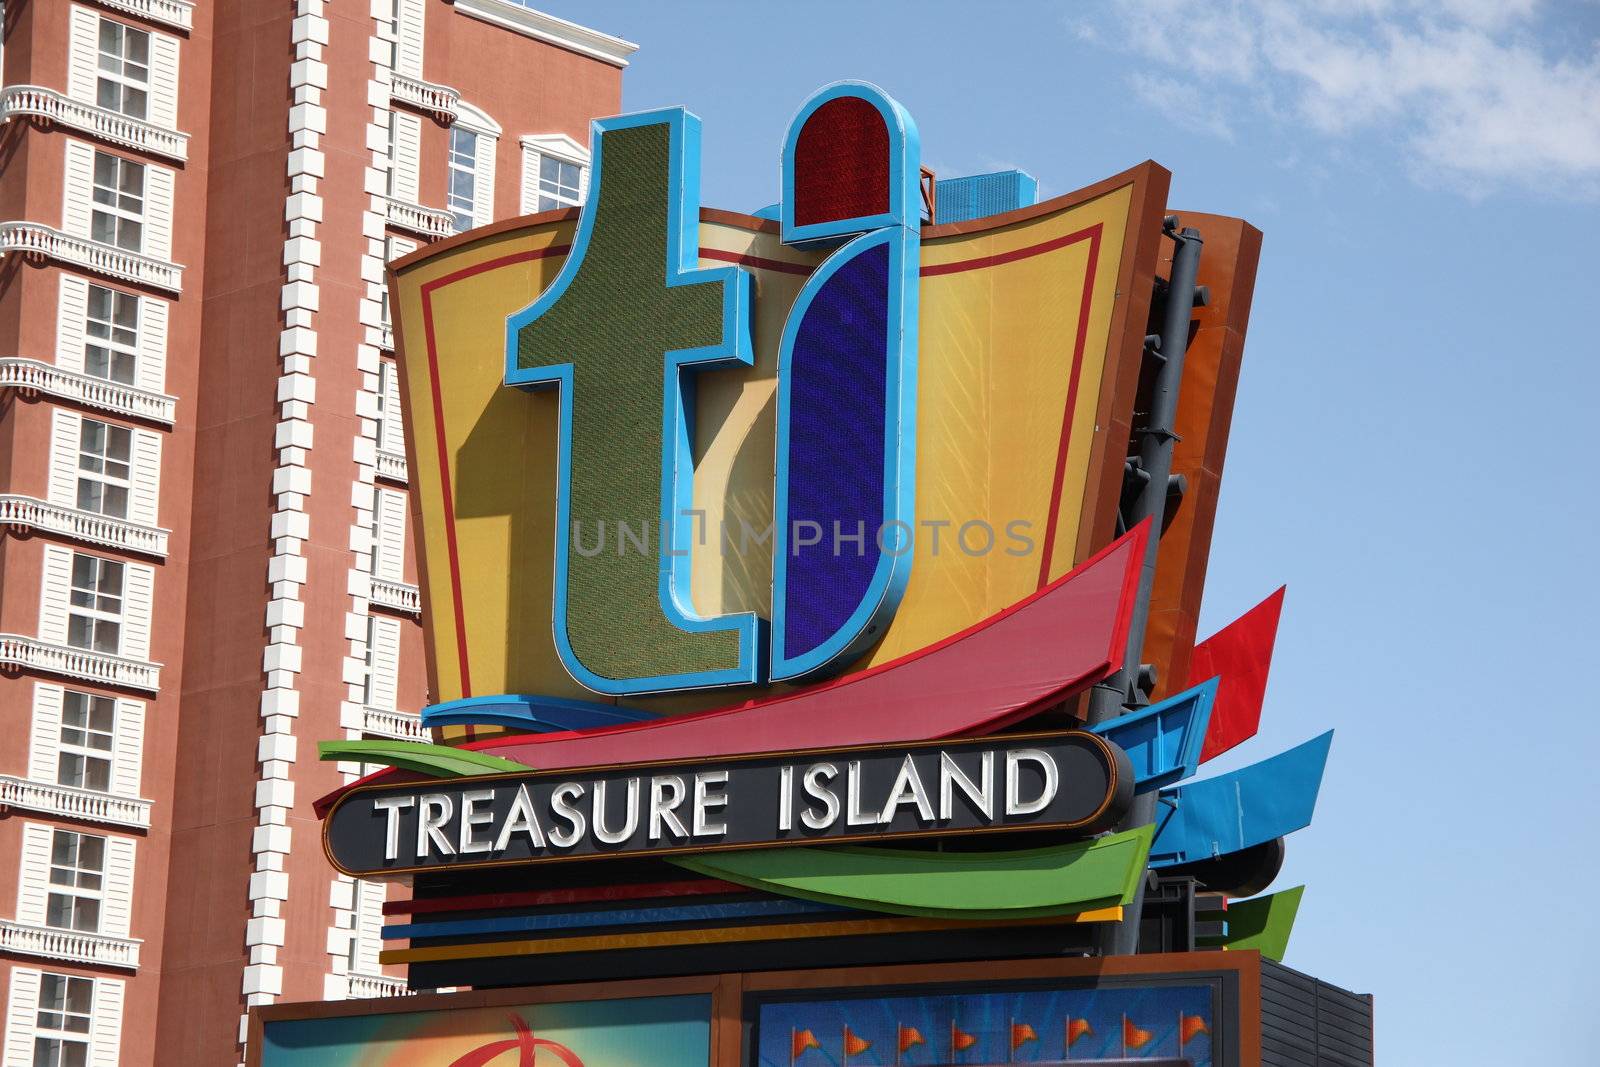 Las Vegas - Treasure Island Hotel by Ffooter